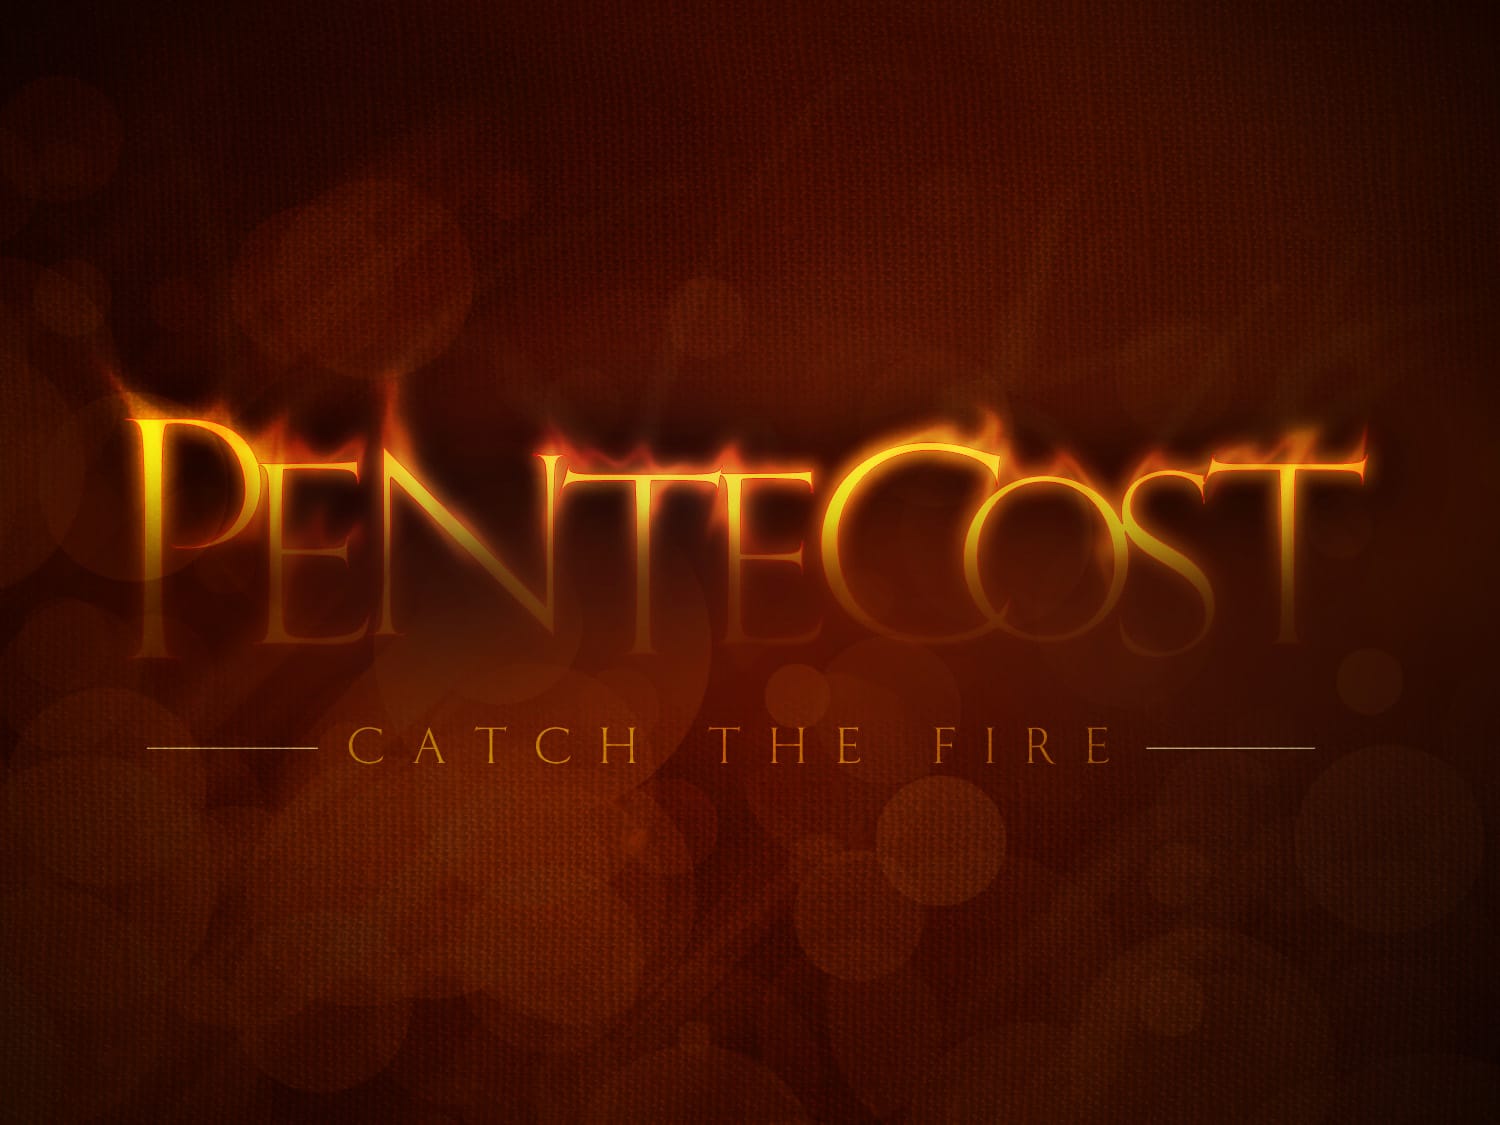 Pentecost Sunday Images